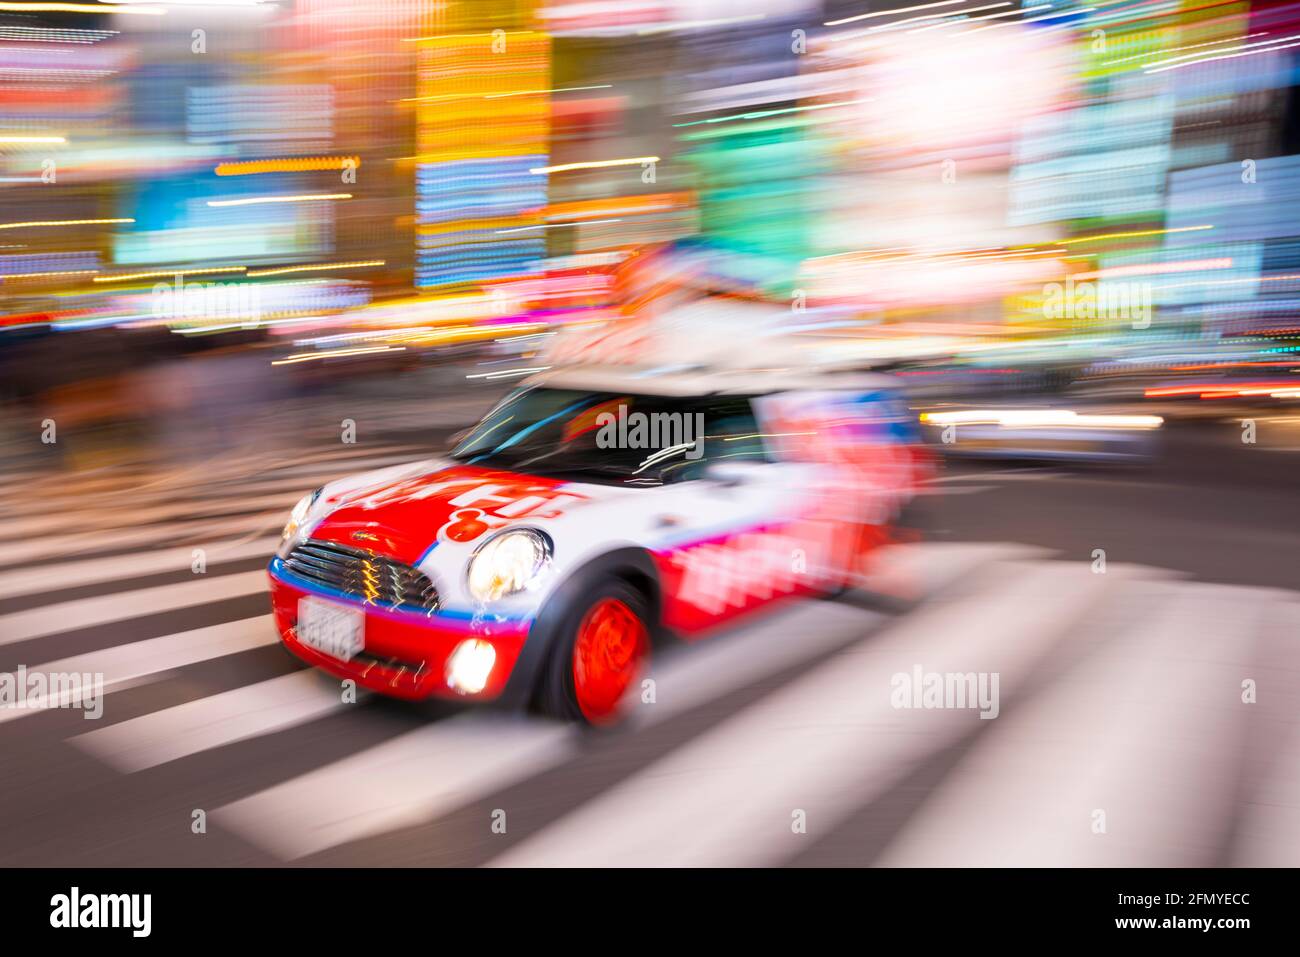 Tokyo, Japan - January 8, 2016: abstract image of a Mini car in Tokyo, Japan. Stock Photo